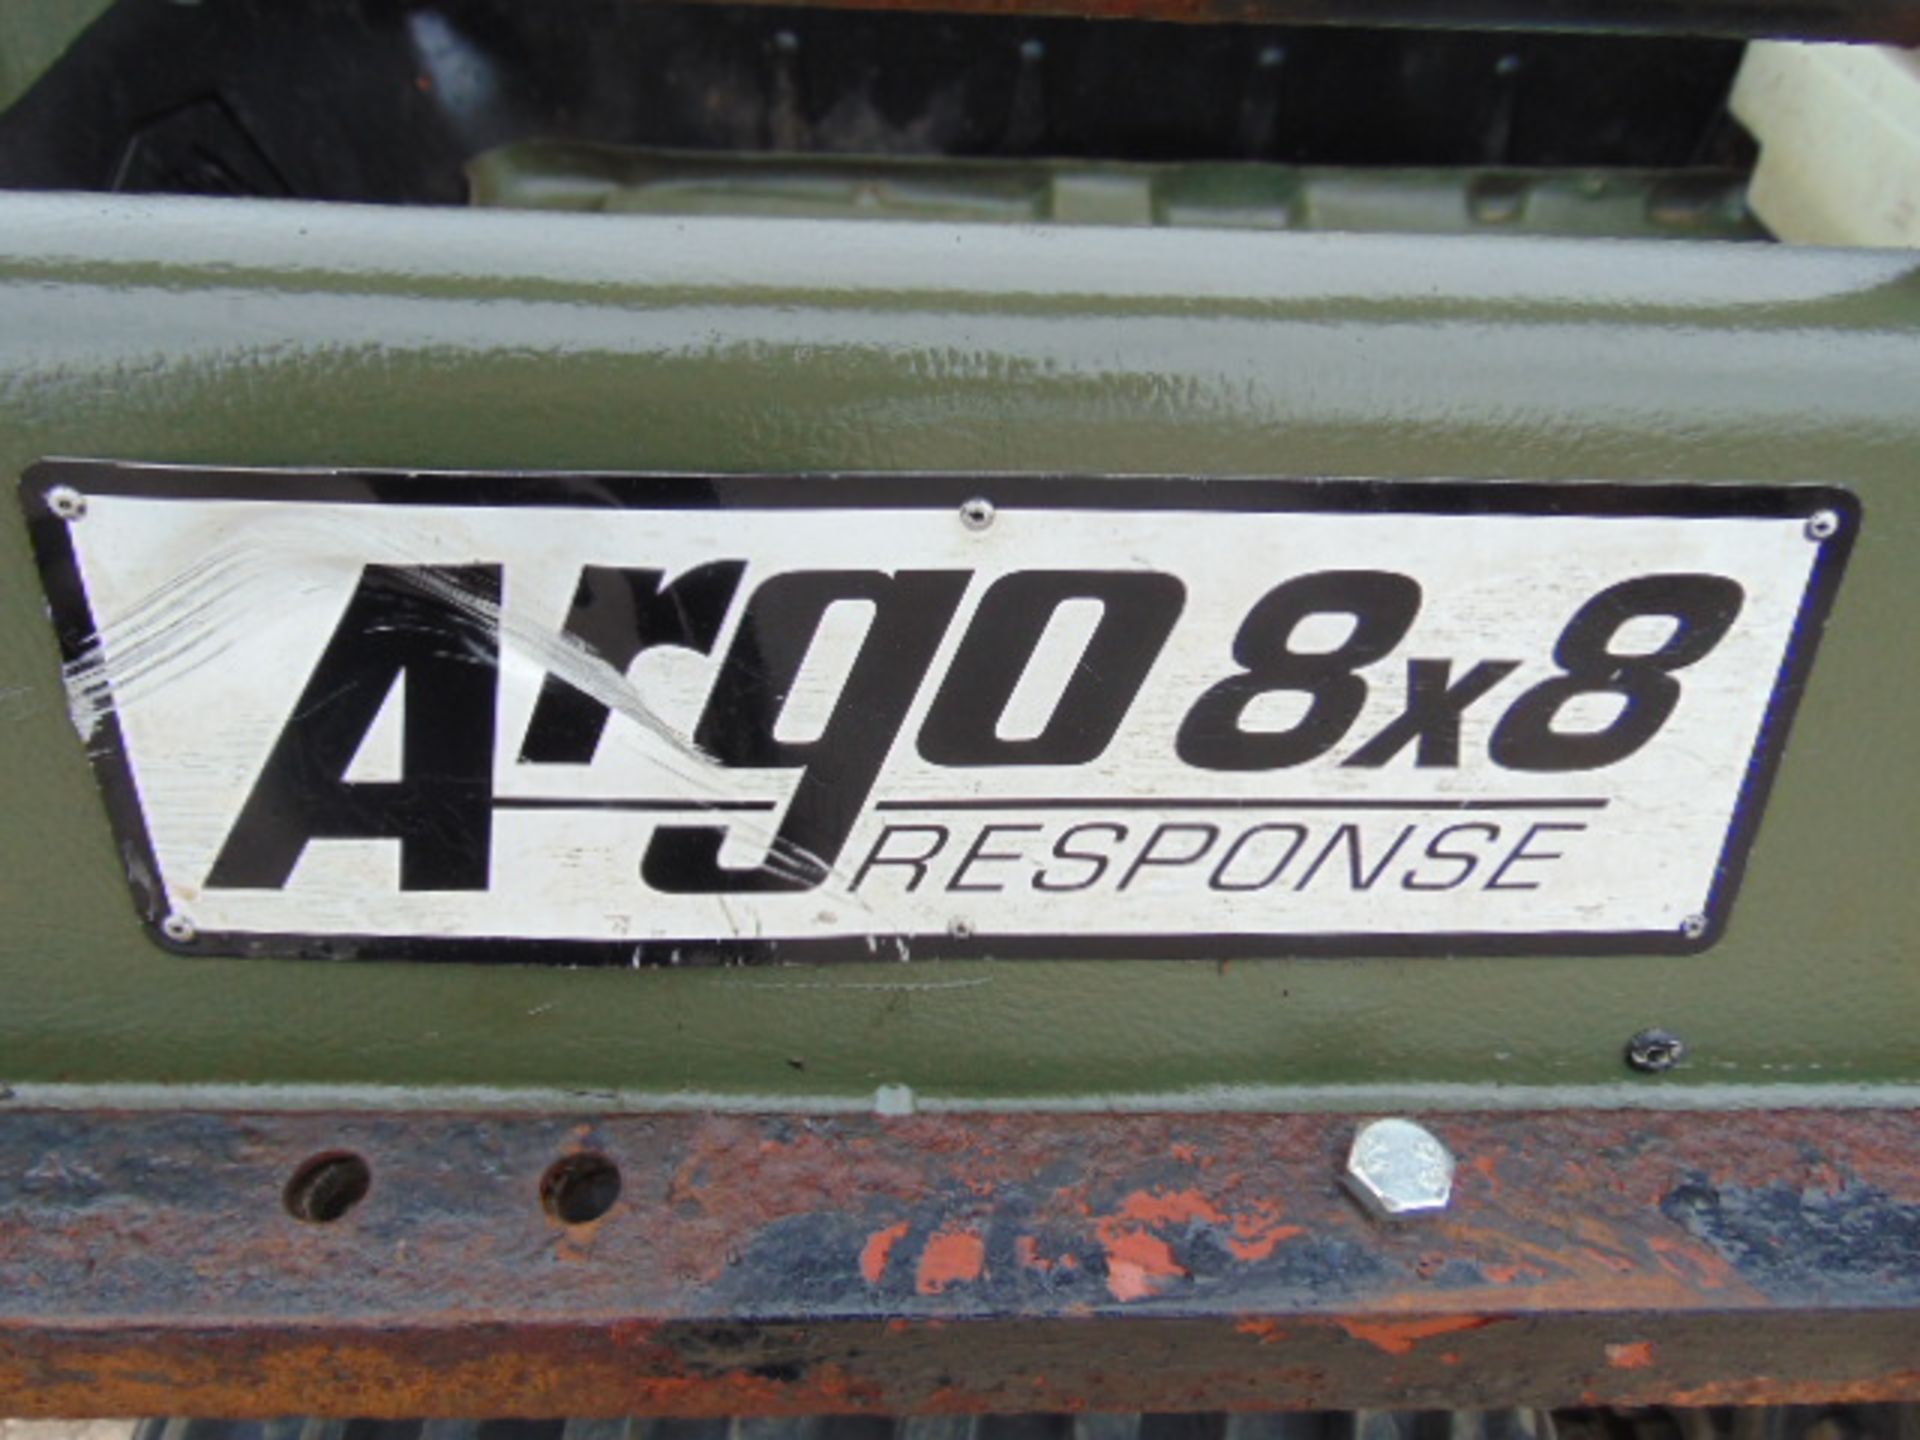 Argocat 8x8 Response Amphibious ATV with Front Mounted Winch - Bild 27 aus 28